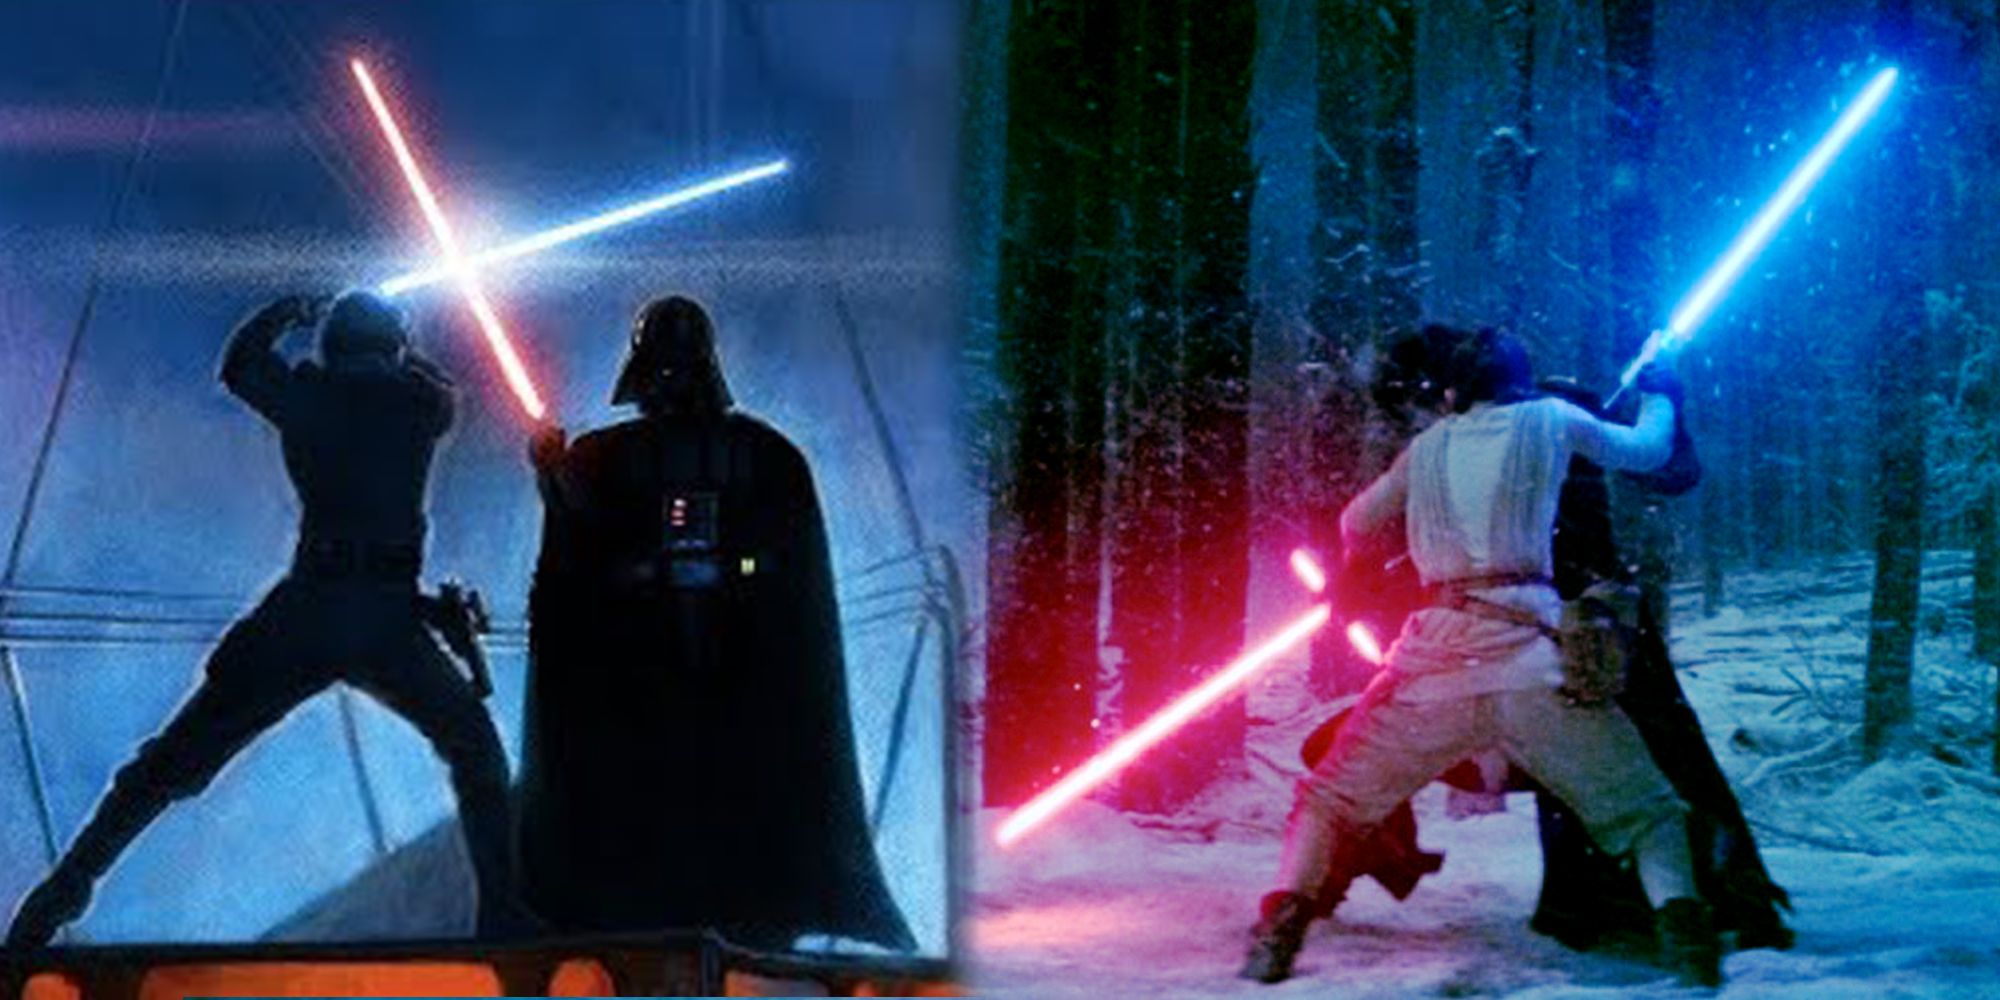 Star Wars Luke Skywalker vs Darth Vader and Rey vs Kylo Ren